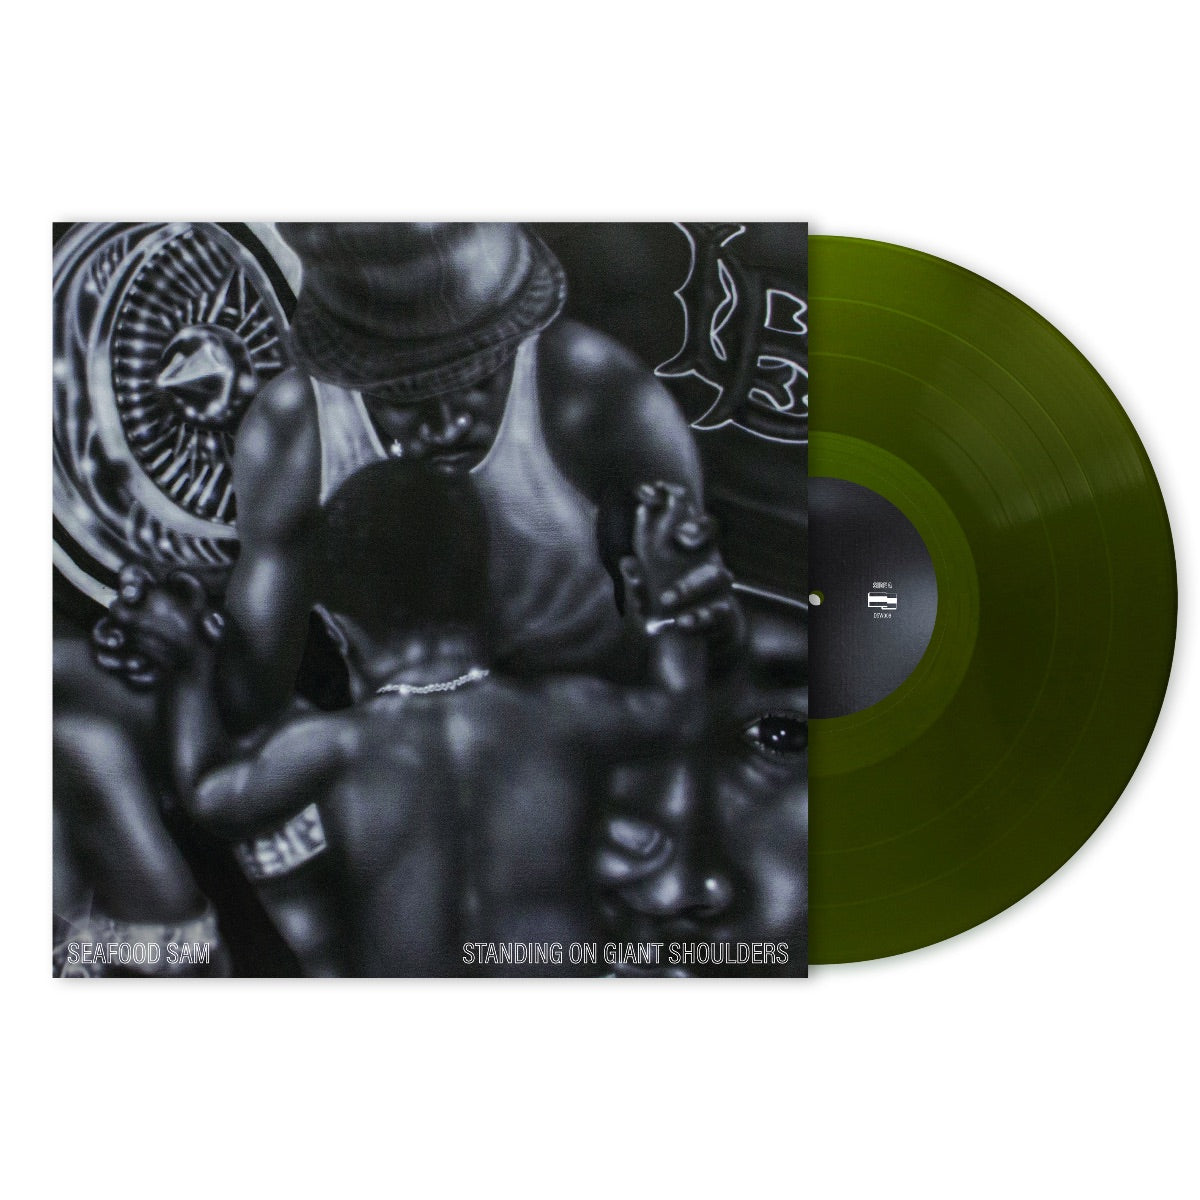 Seafood Sam - Standing On Giant Shoulders: Forest Green Vinyl LP